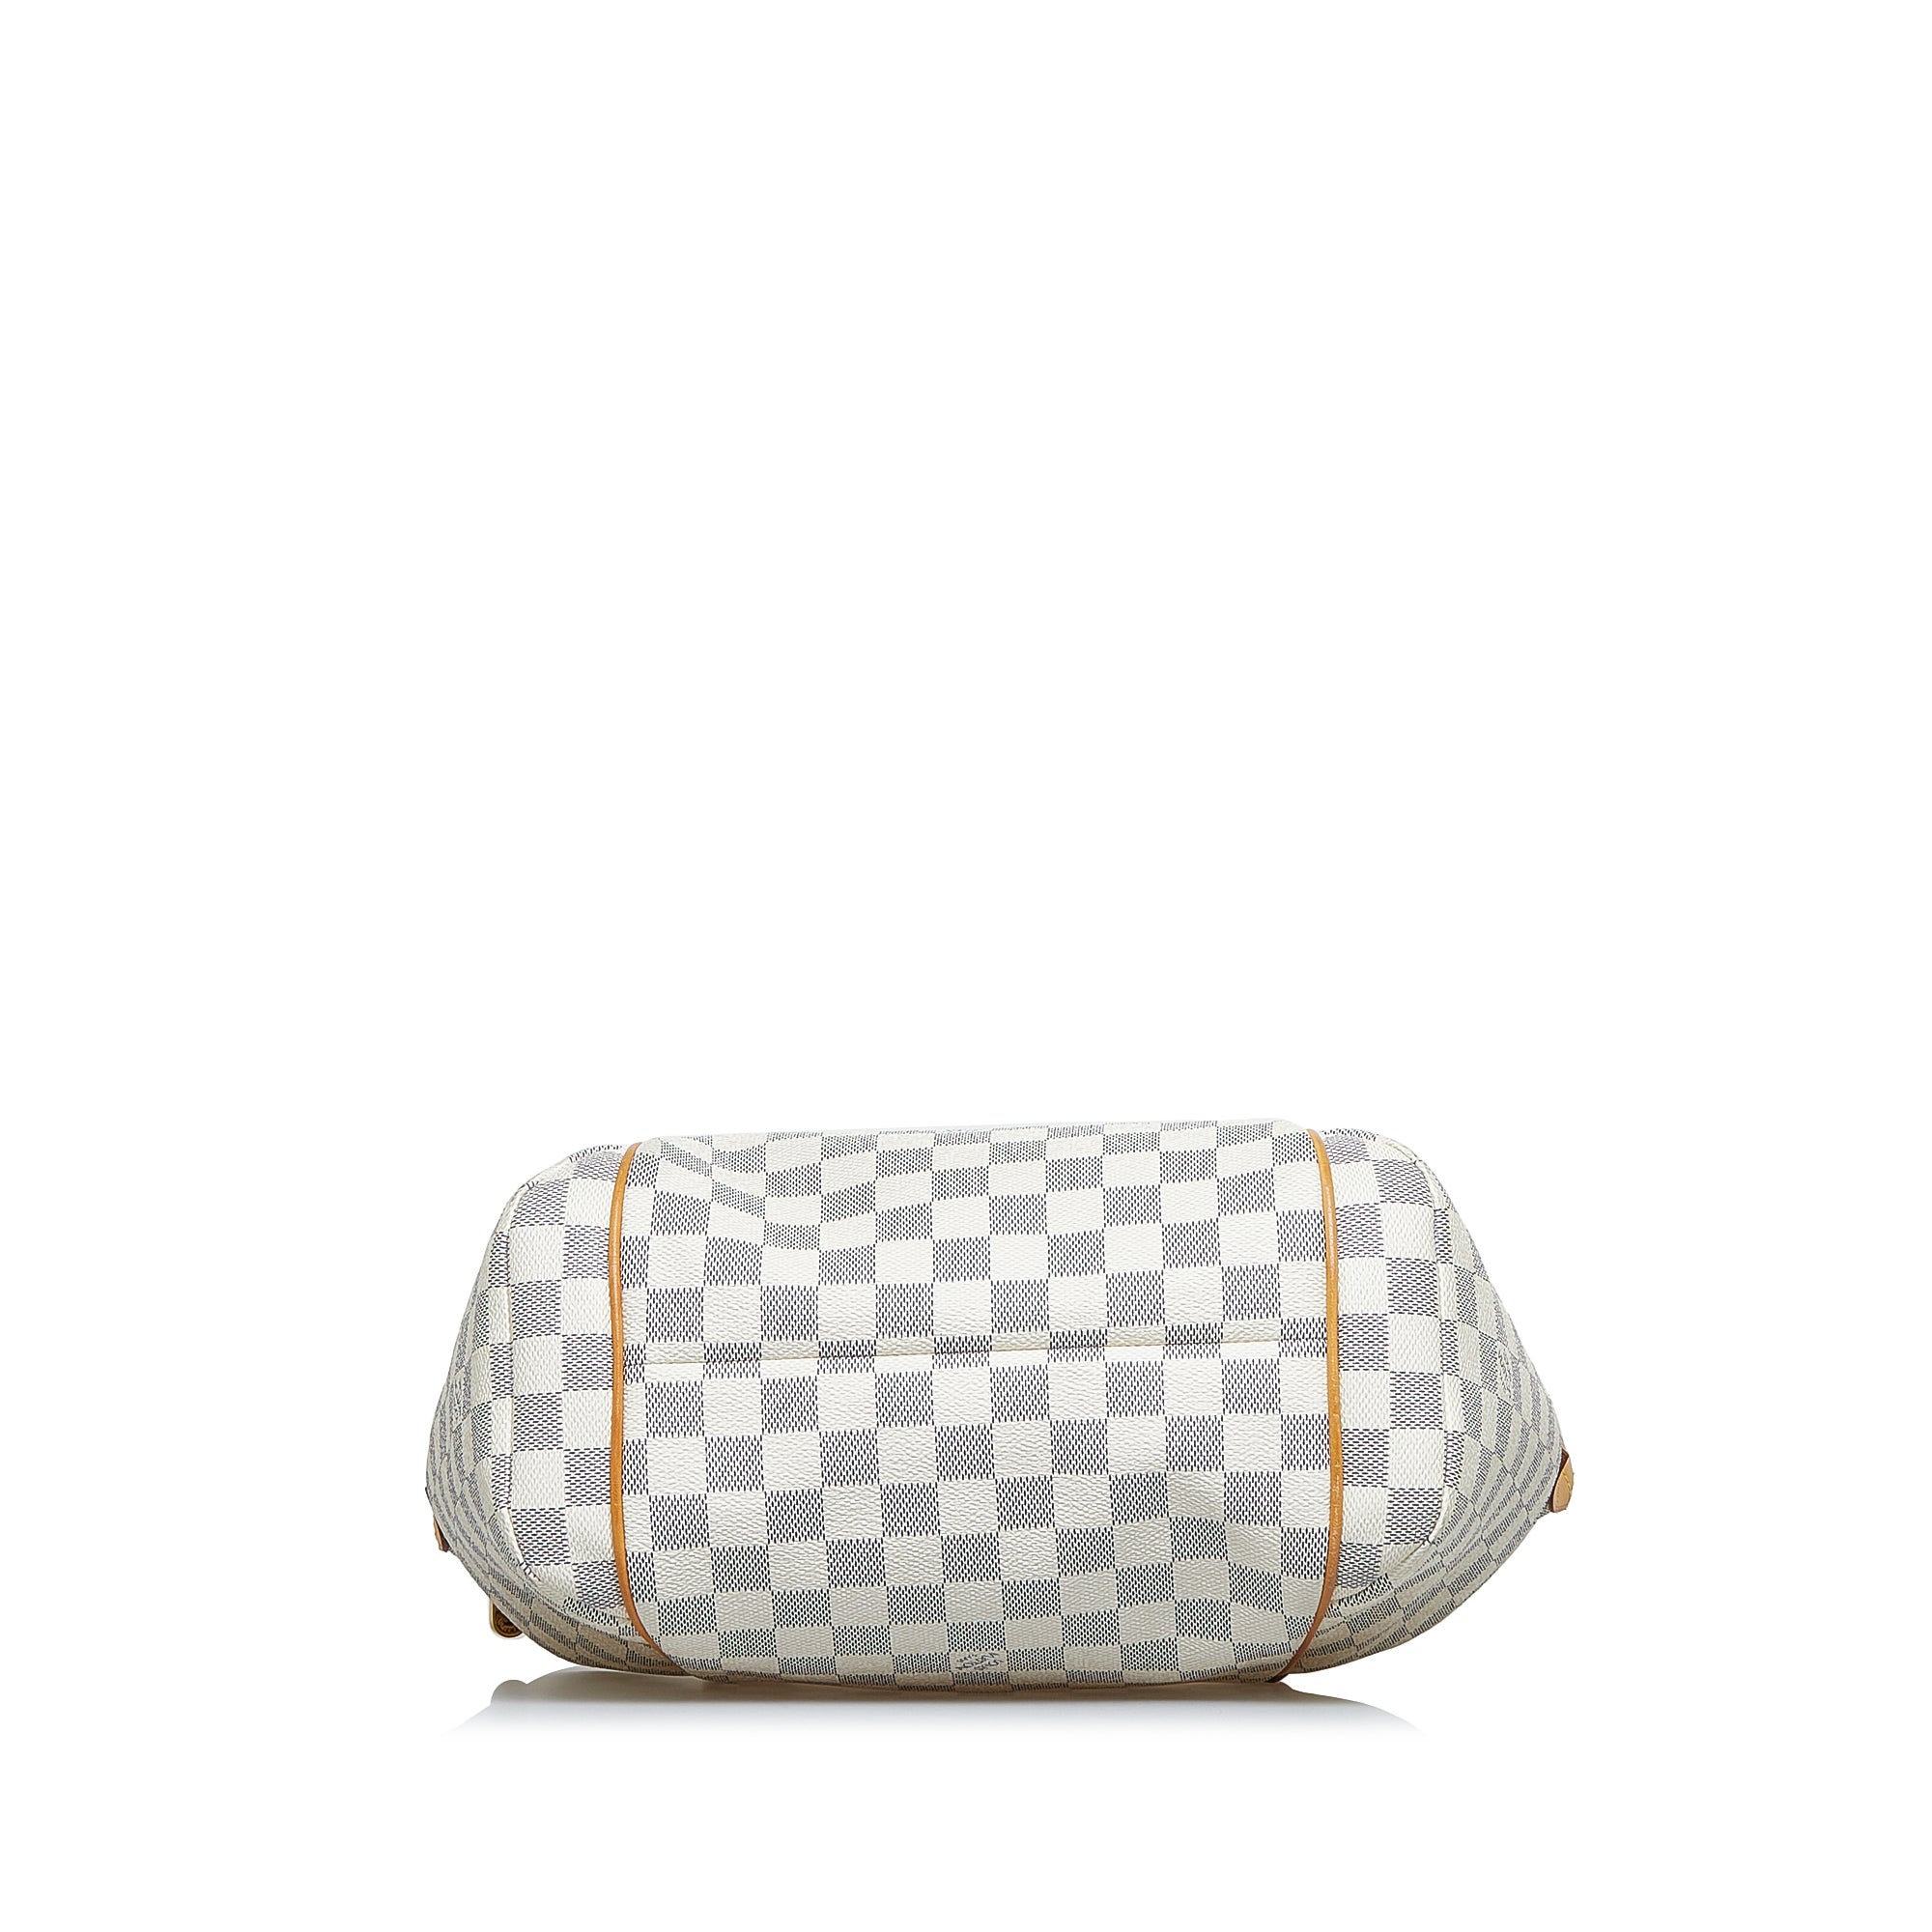 AUTHENTIC Louis Vuitton LV Shoulder Bag Totally PM White Damier